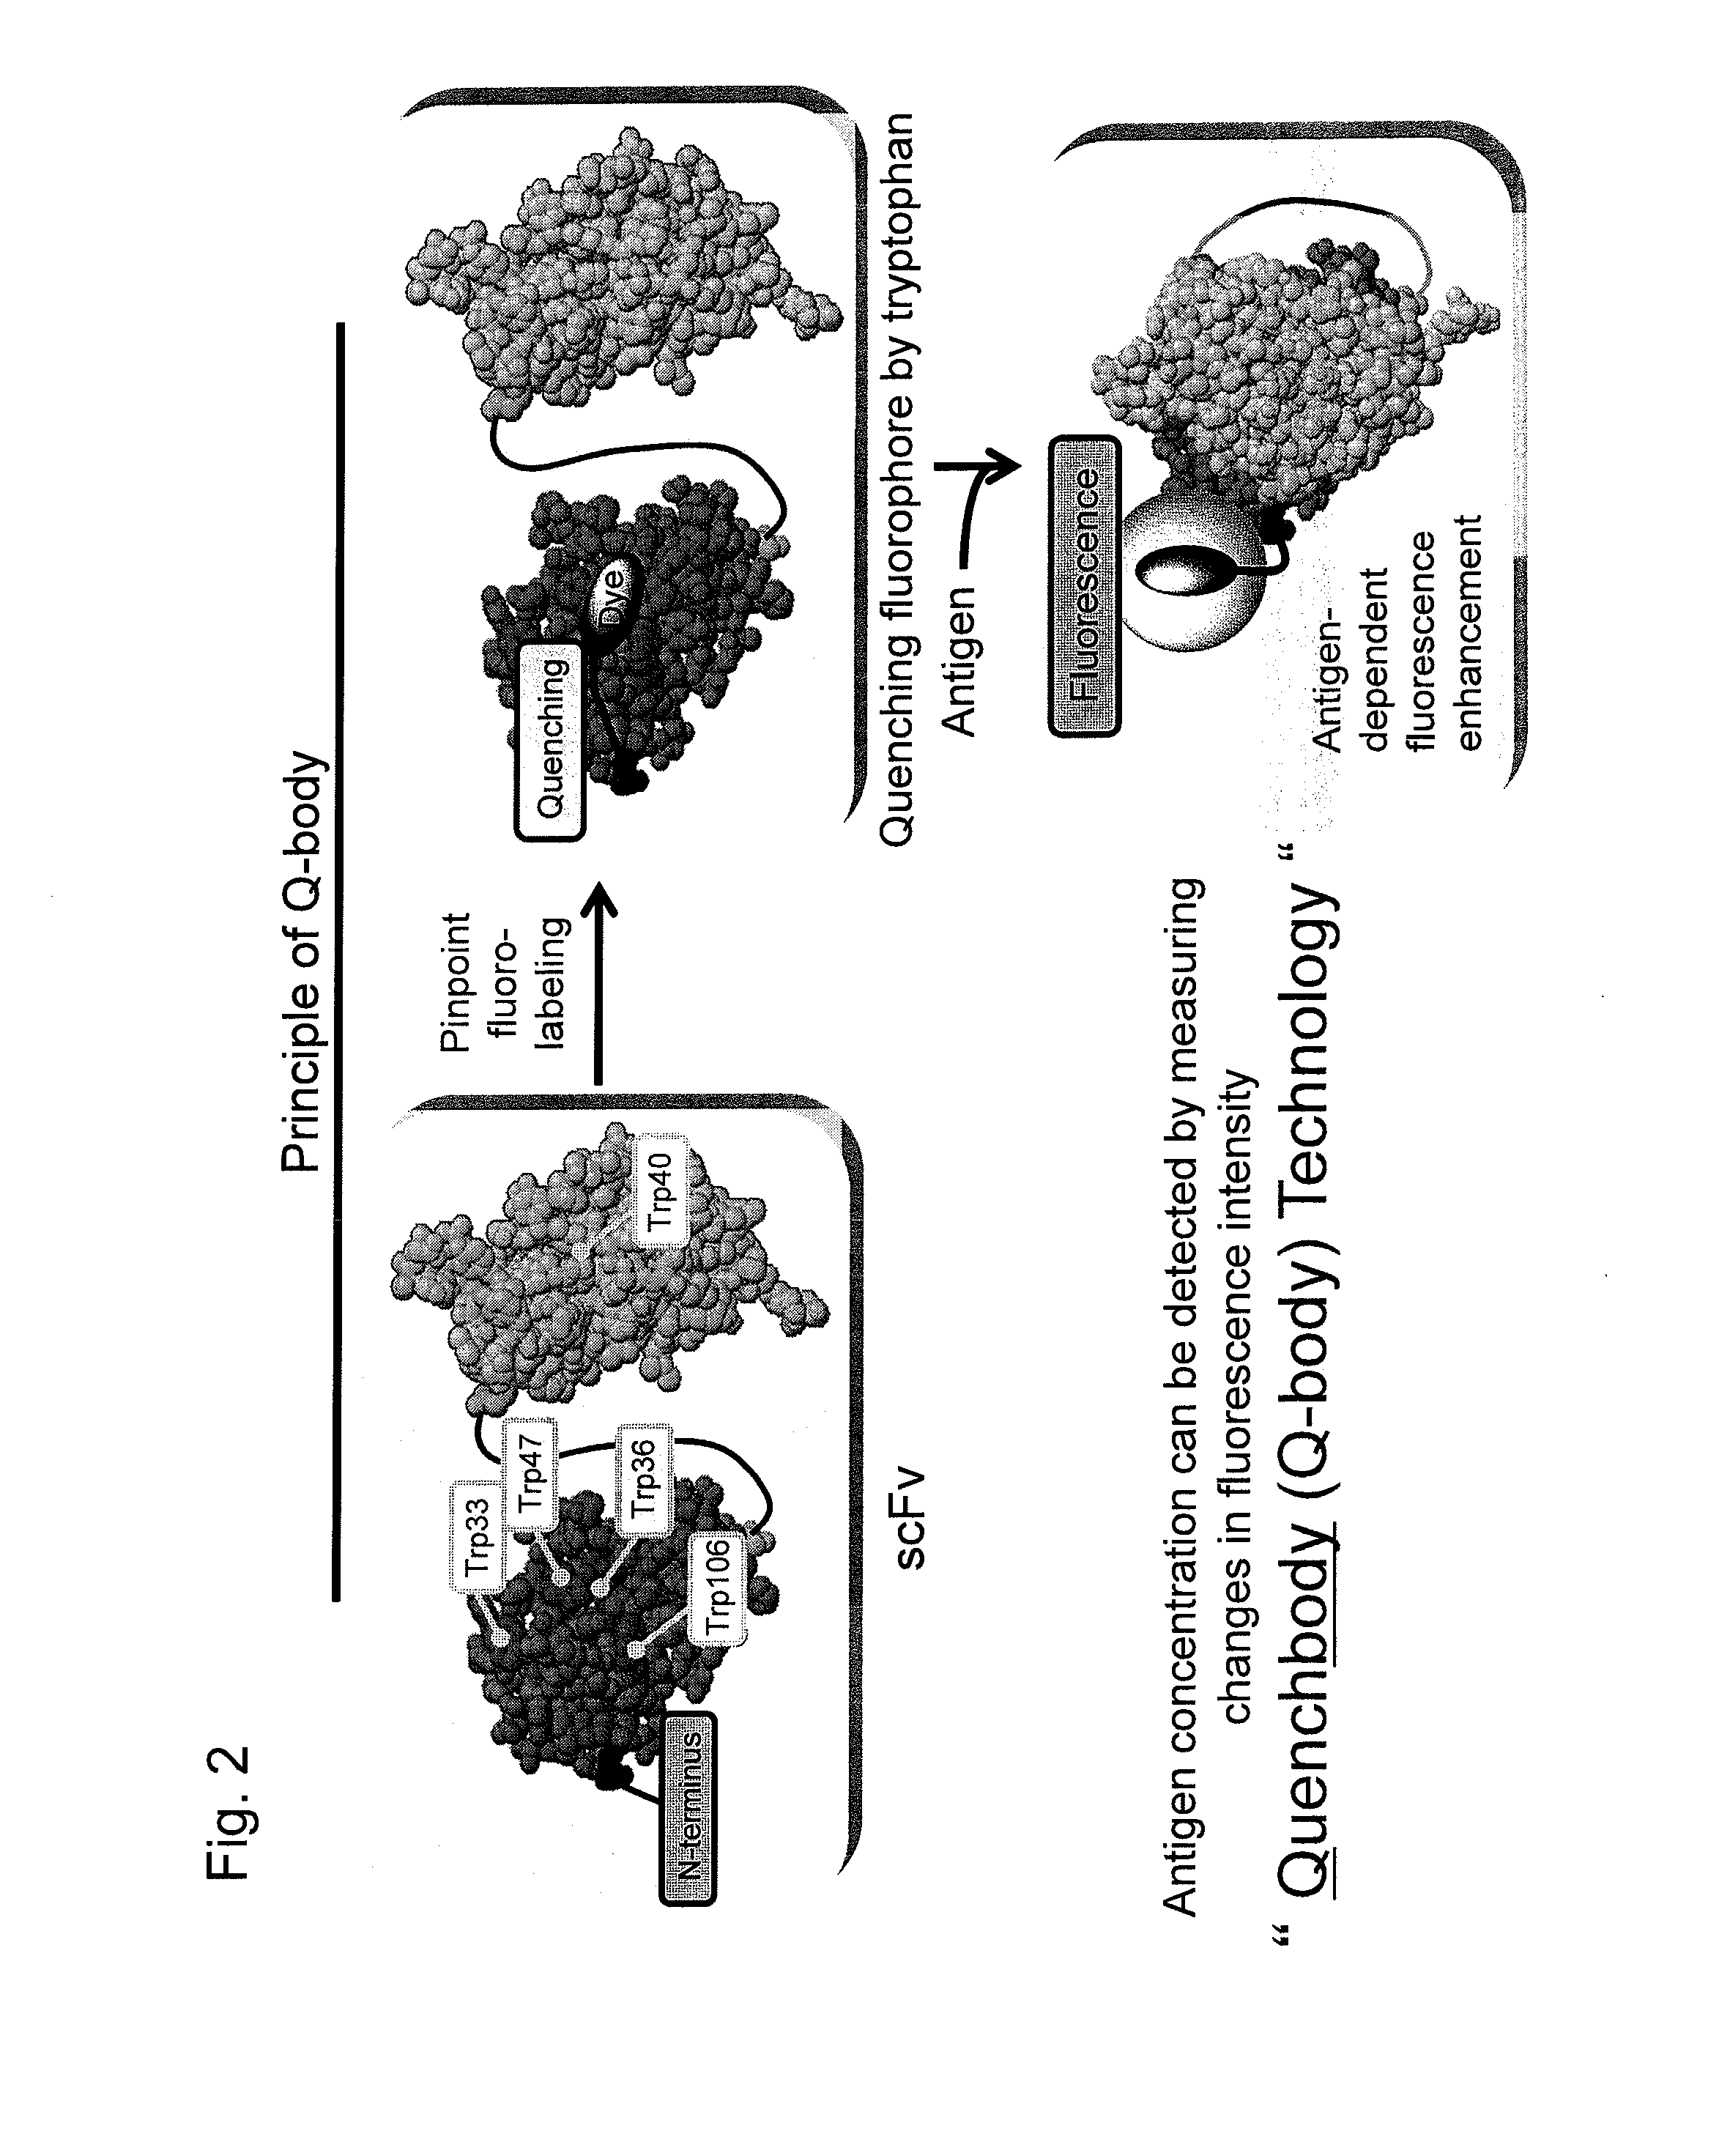 Fluorescence immunoassay using polypeptide complex containing fluoro-labeled antibody variable region